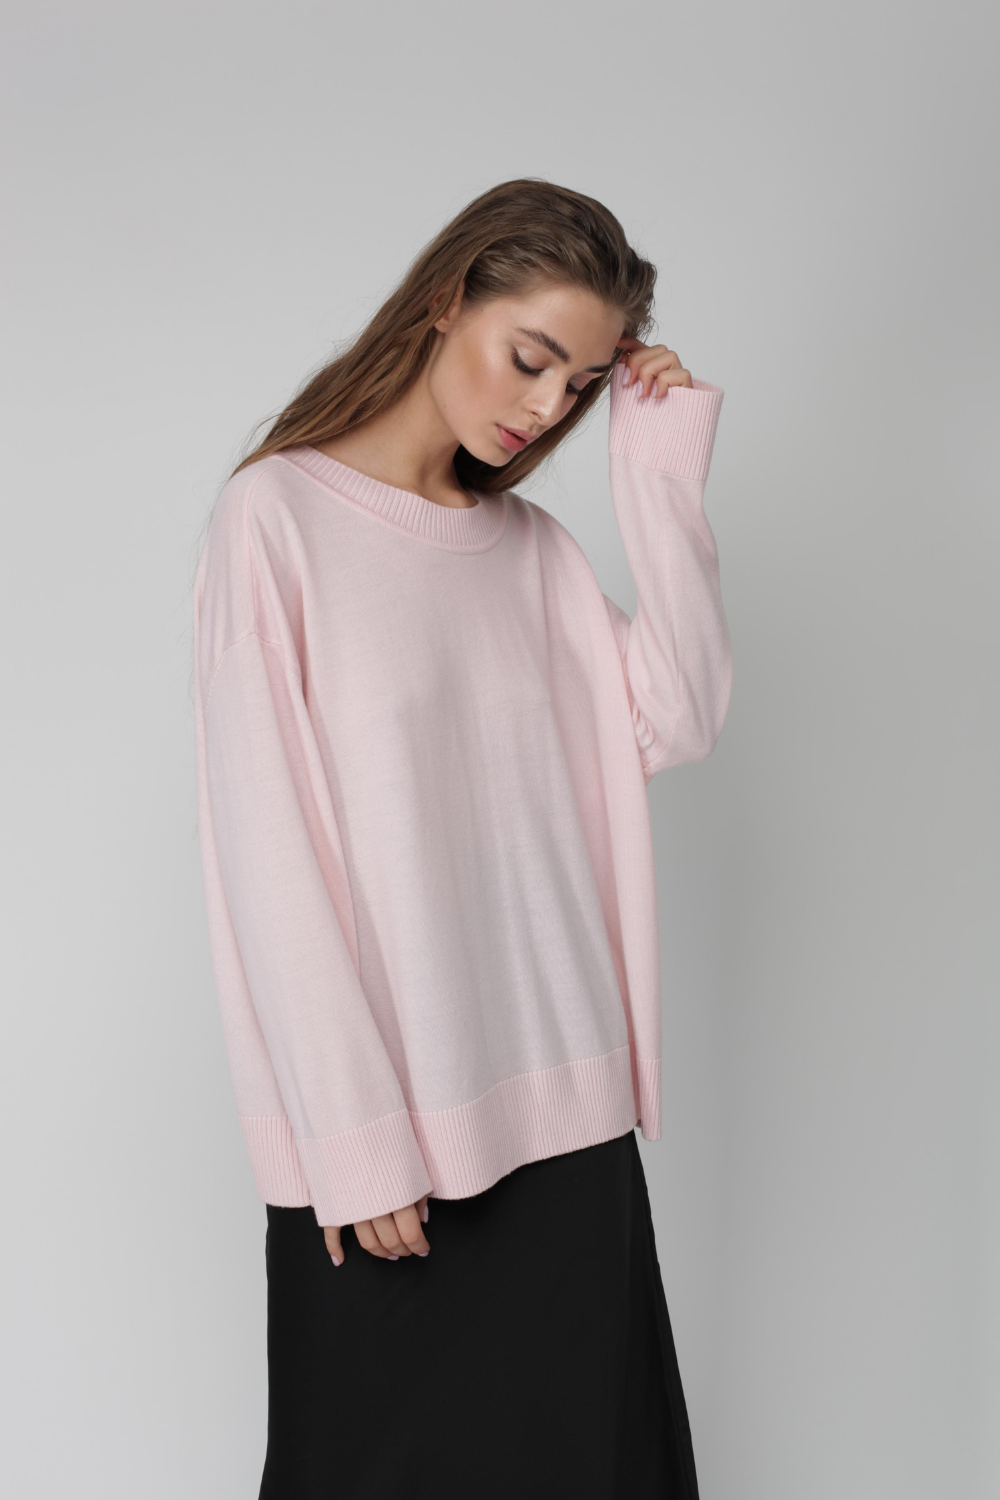 V-neck volumetric sweater (Miss Secret) PU-021